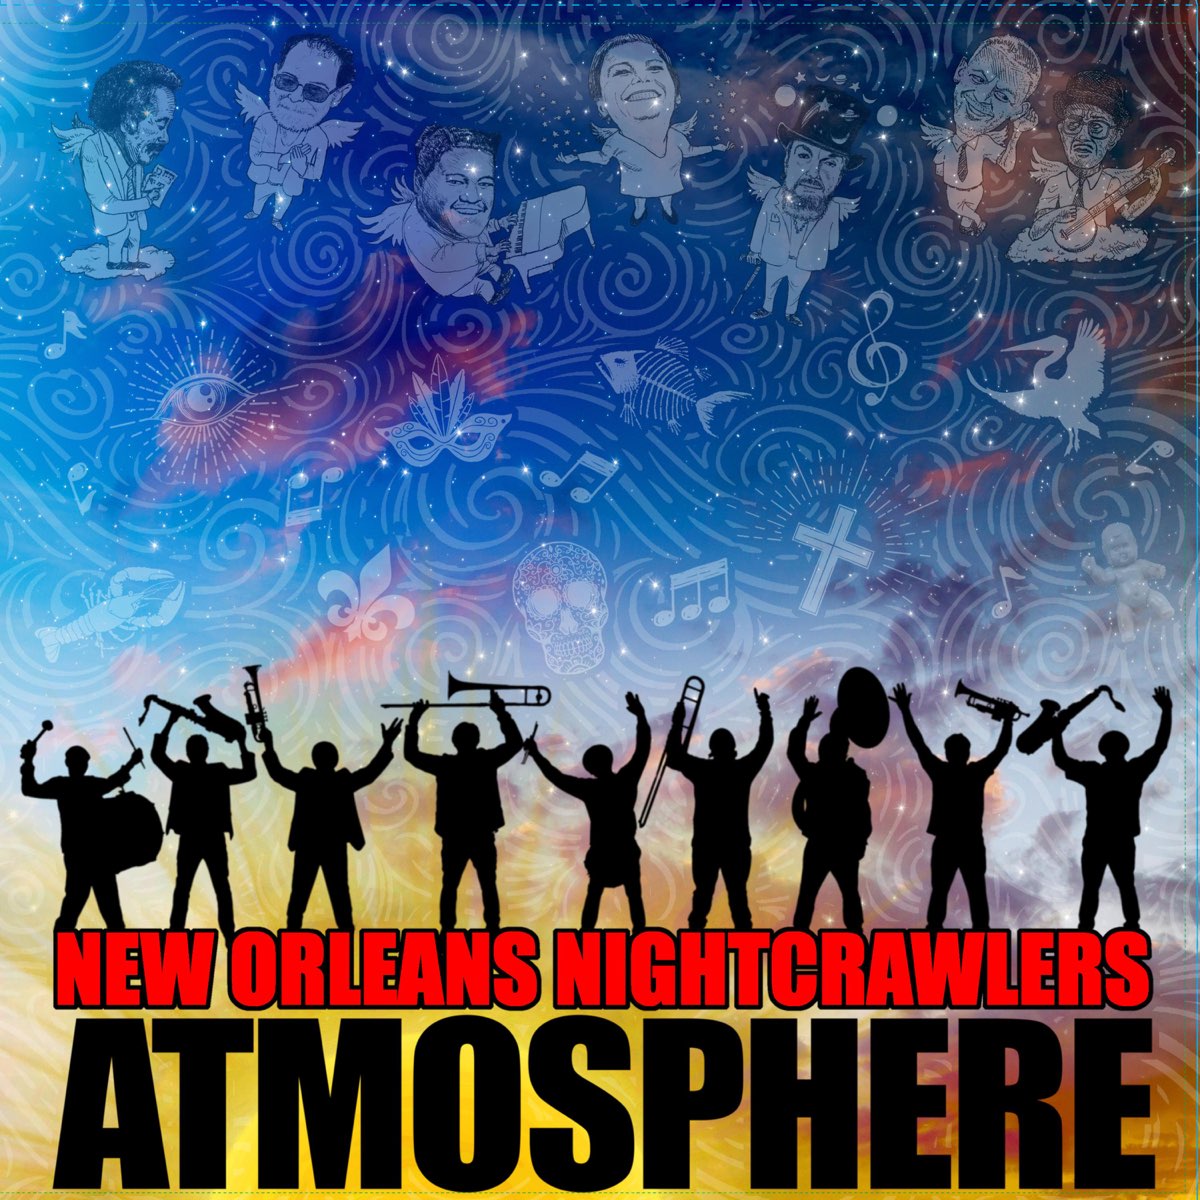 Atmosphere - Album by New Orleans Nightcrawlers - Apple Music